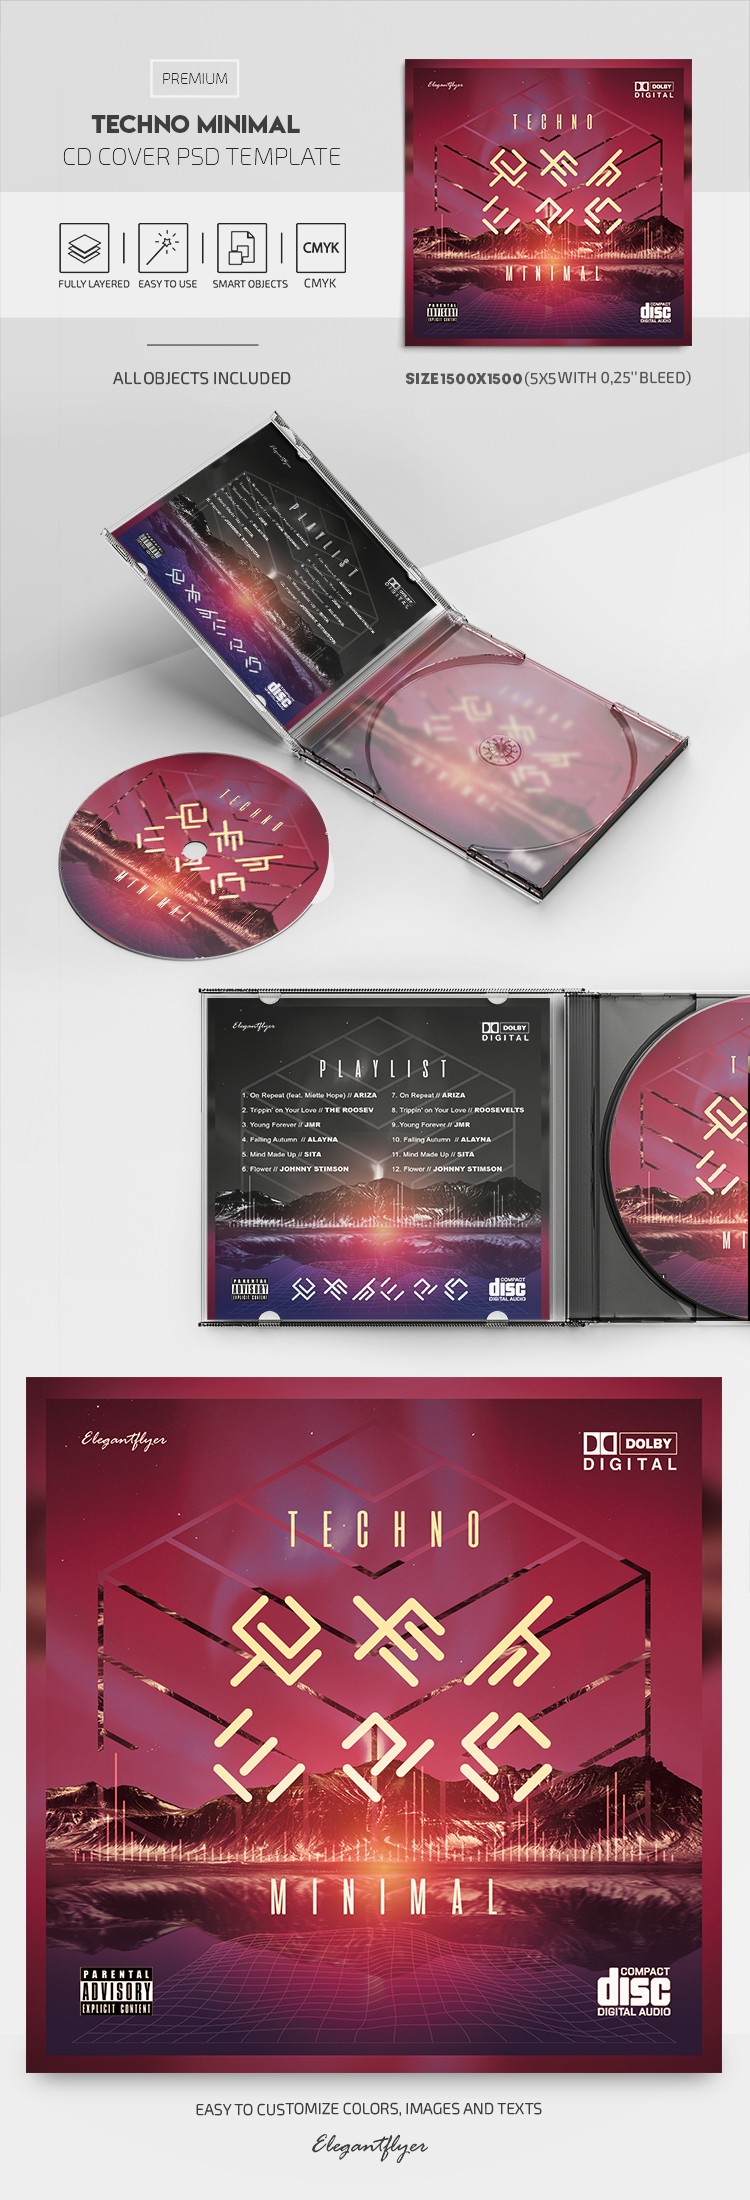 Portada de CD de Techno Minimal by ElegantFlyer